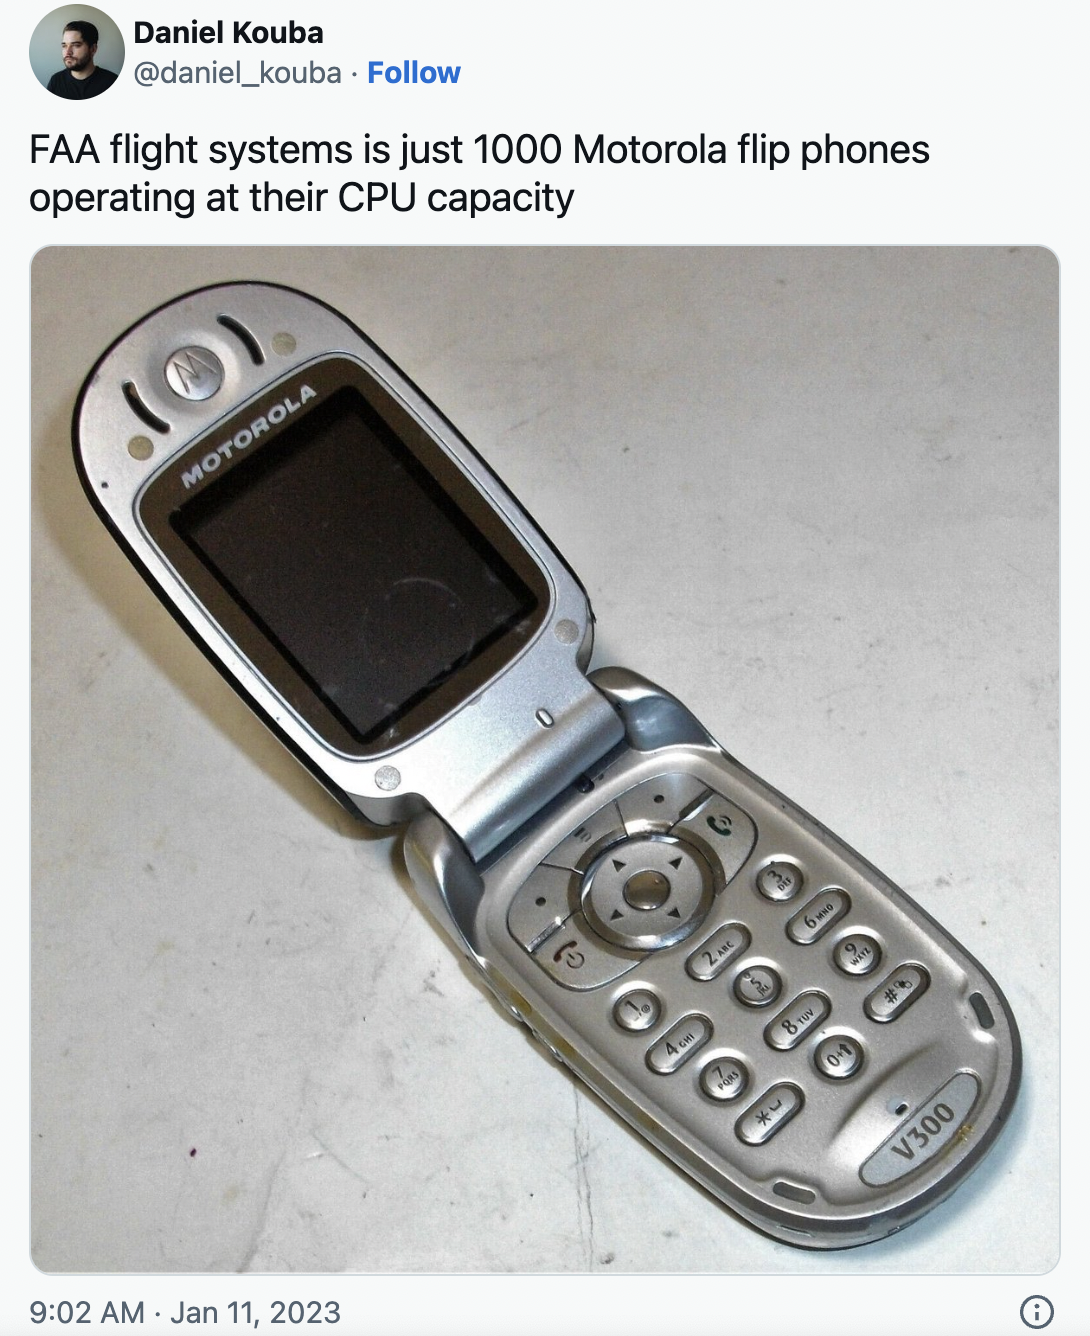 motorola phone ol flight systems is just 1000 Motorola flip phones operating at their Cpu capacity 0 Motoro